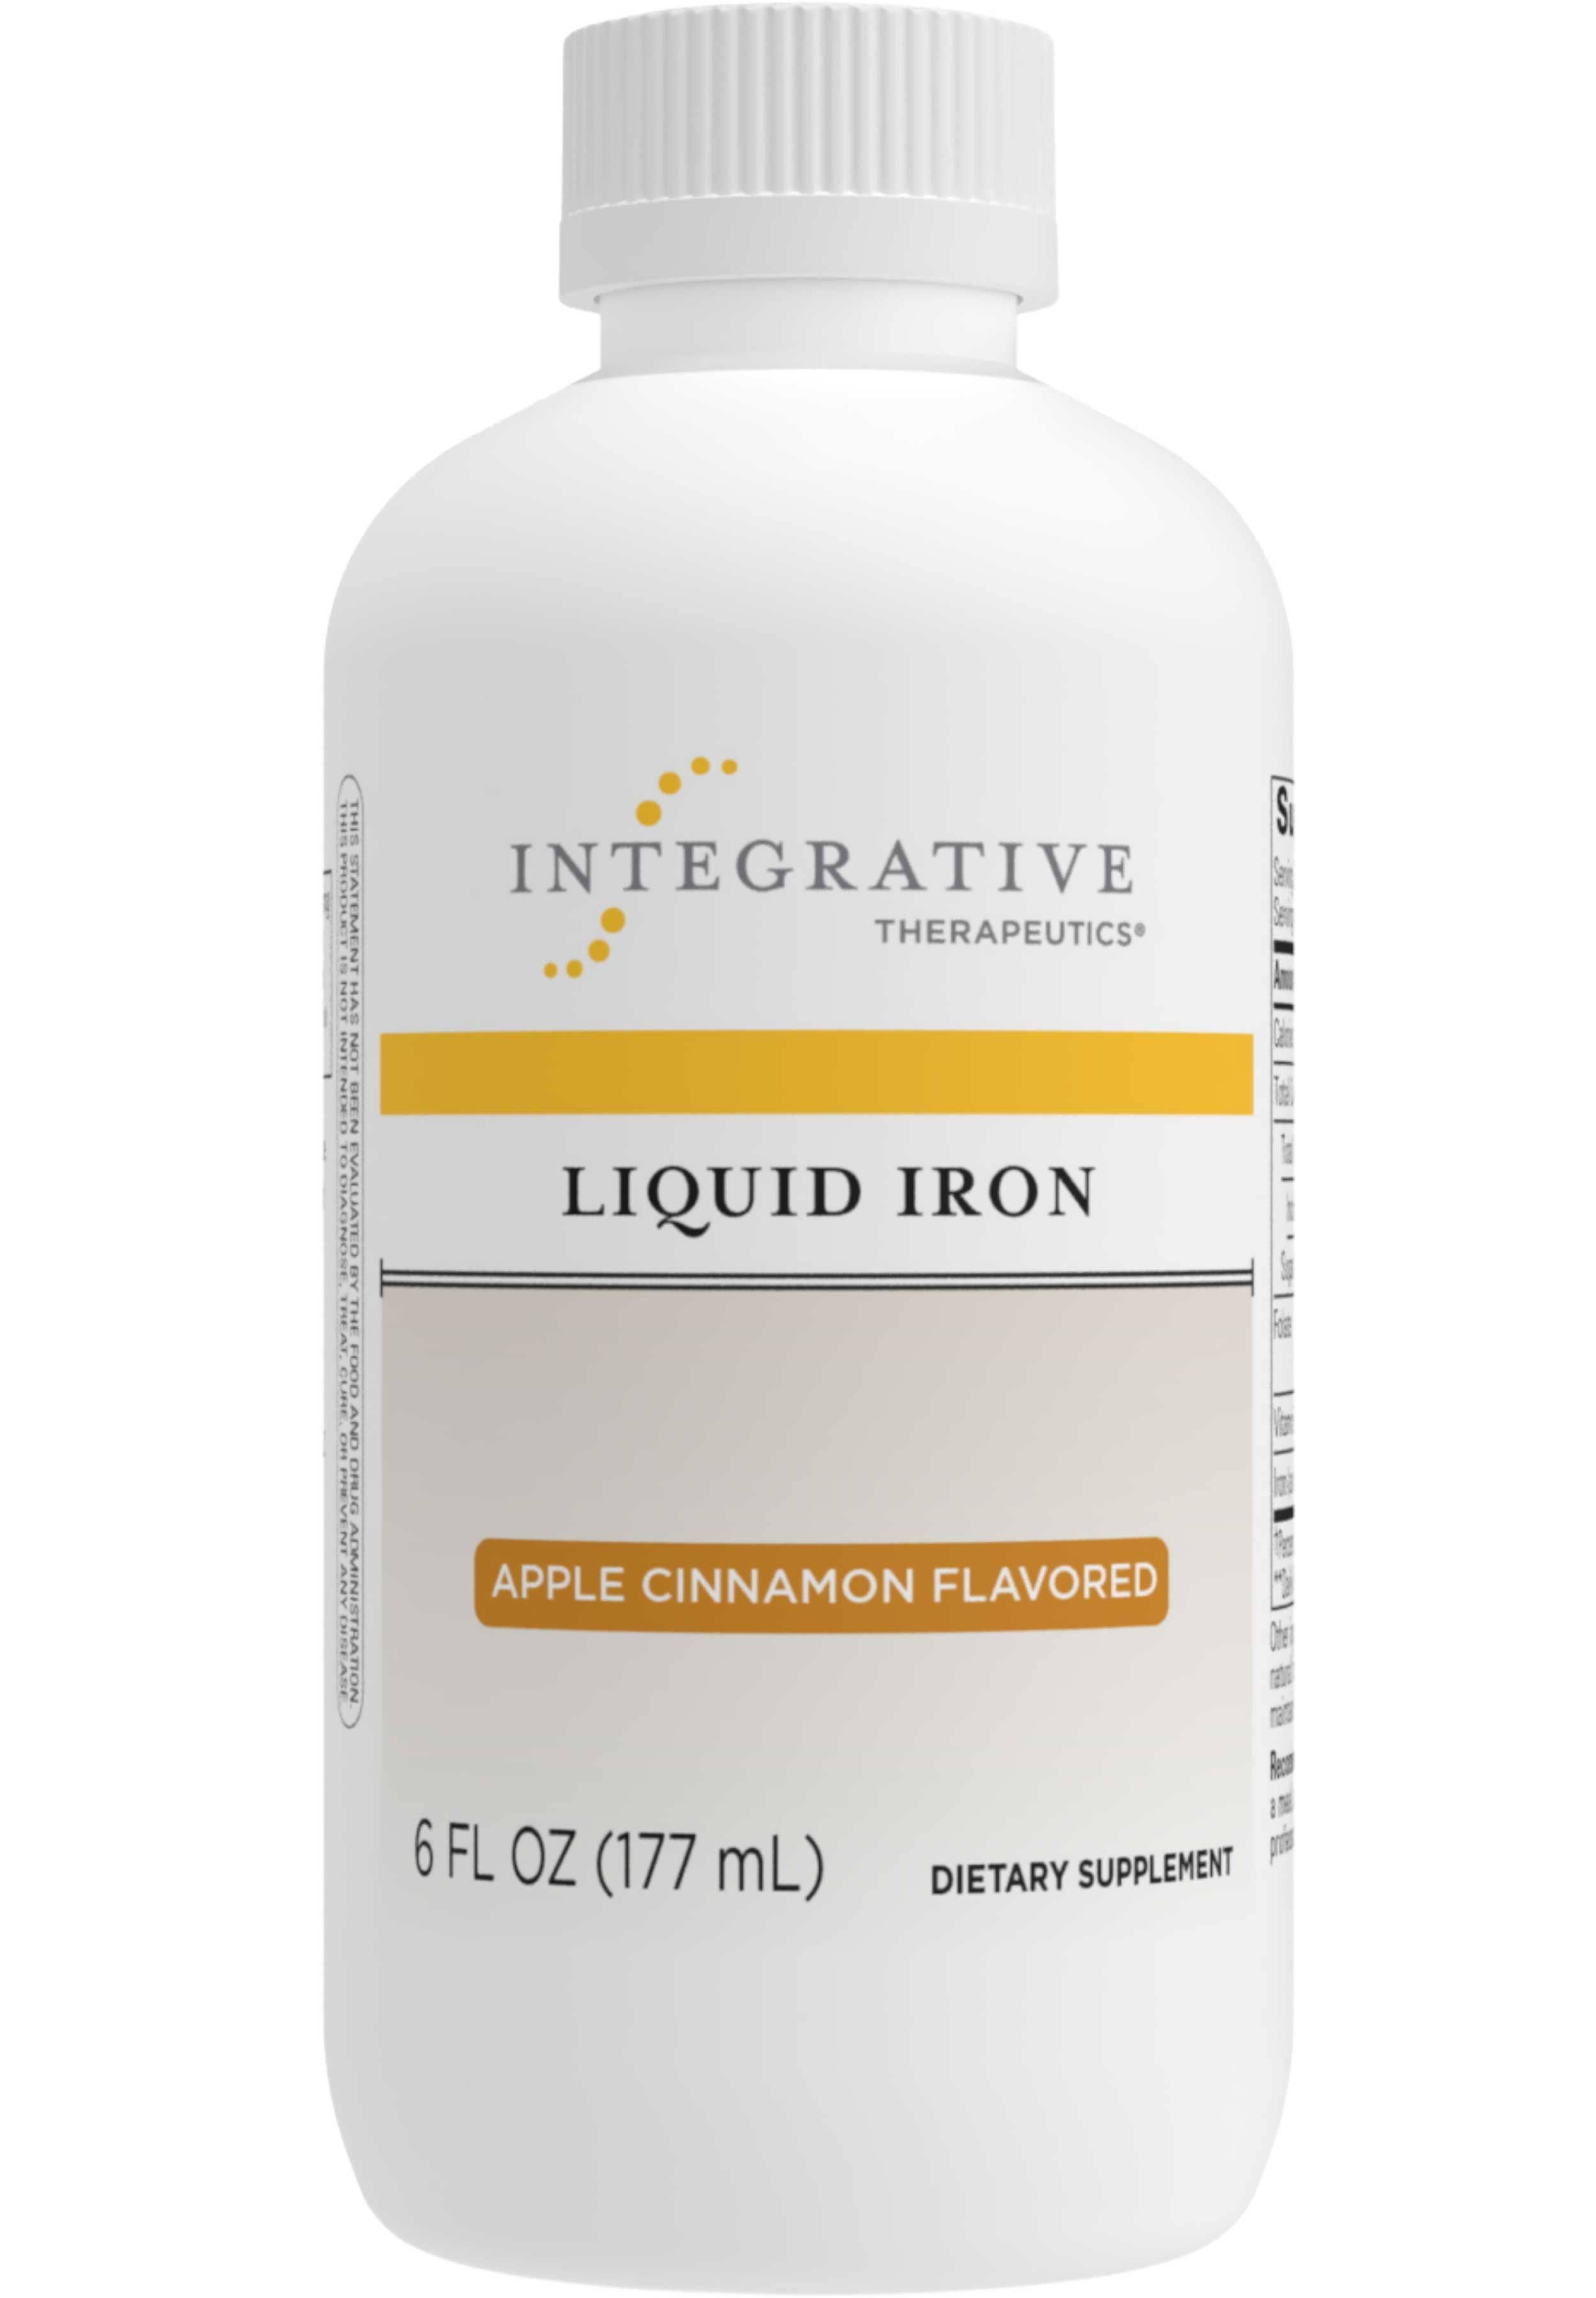 Integrative Therapeutics - Liquid Iron, Apple Cinnamon Flavored - 6